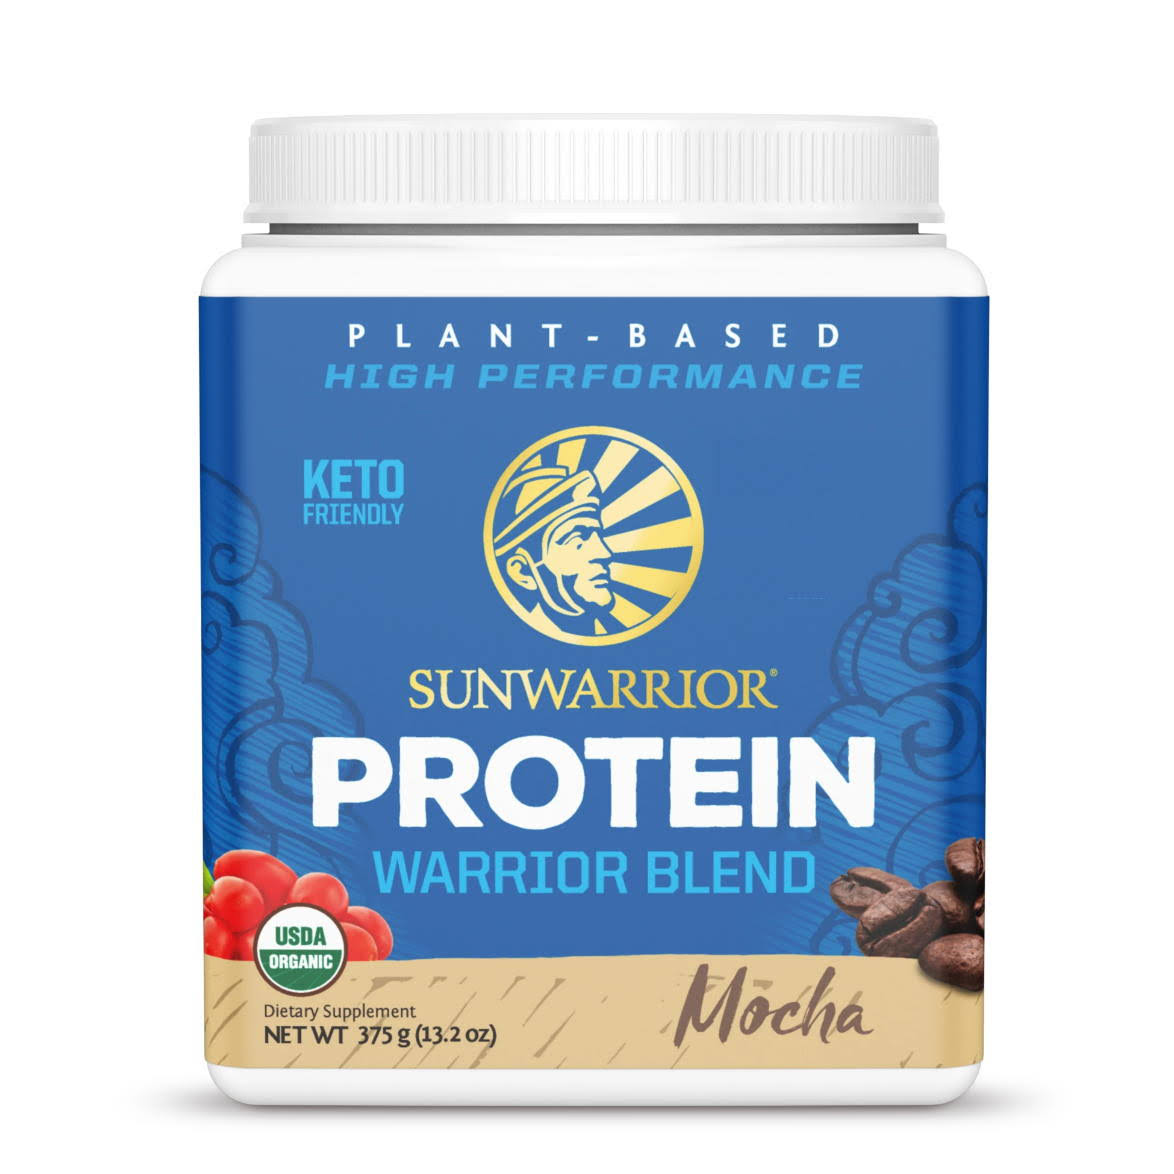 Sunwarrior Warrior Blend Plant-Based Organic Protein Mocha Supplement - 13.2oz